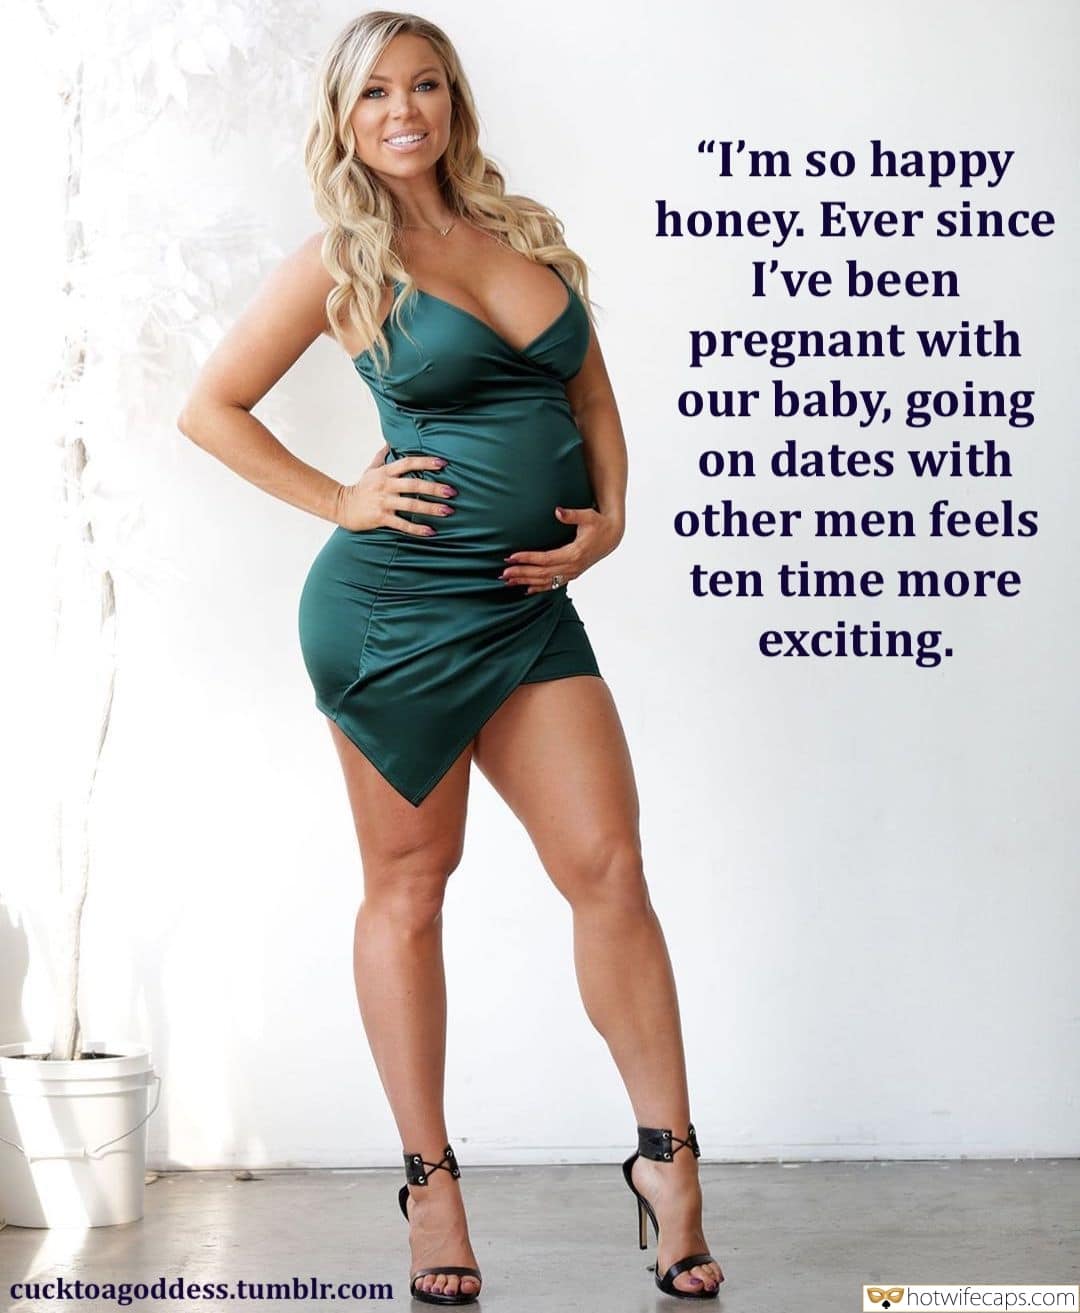 hotwife cuckold cuckold humiliation hotwife caption voluptuous pregnant blonde in green dress